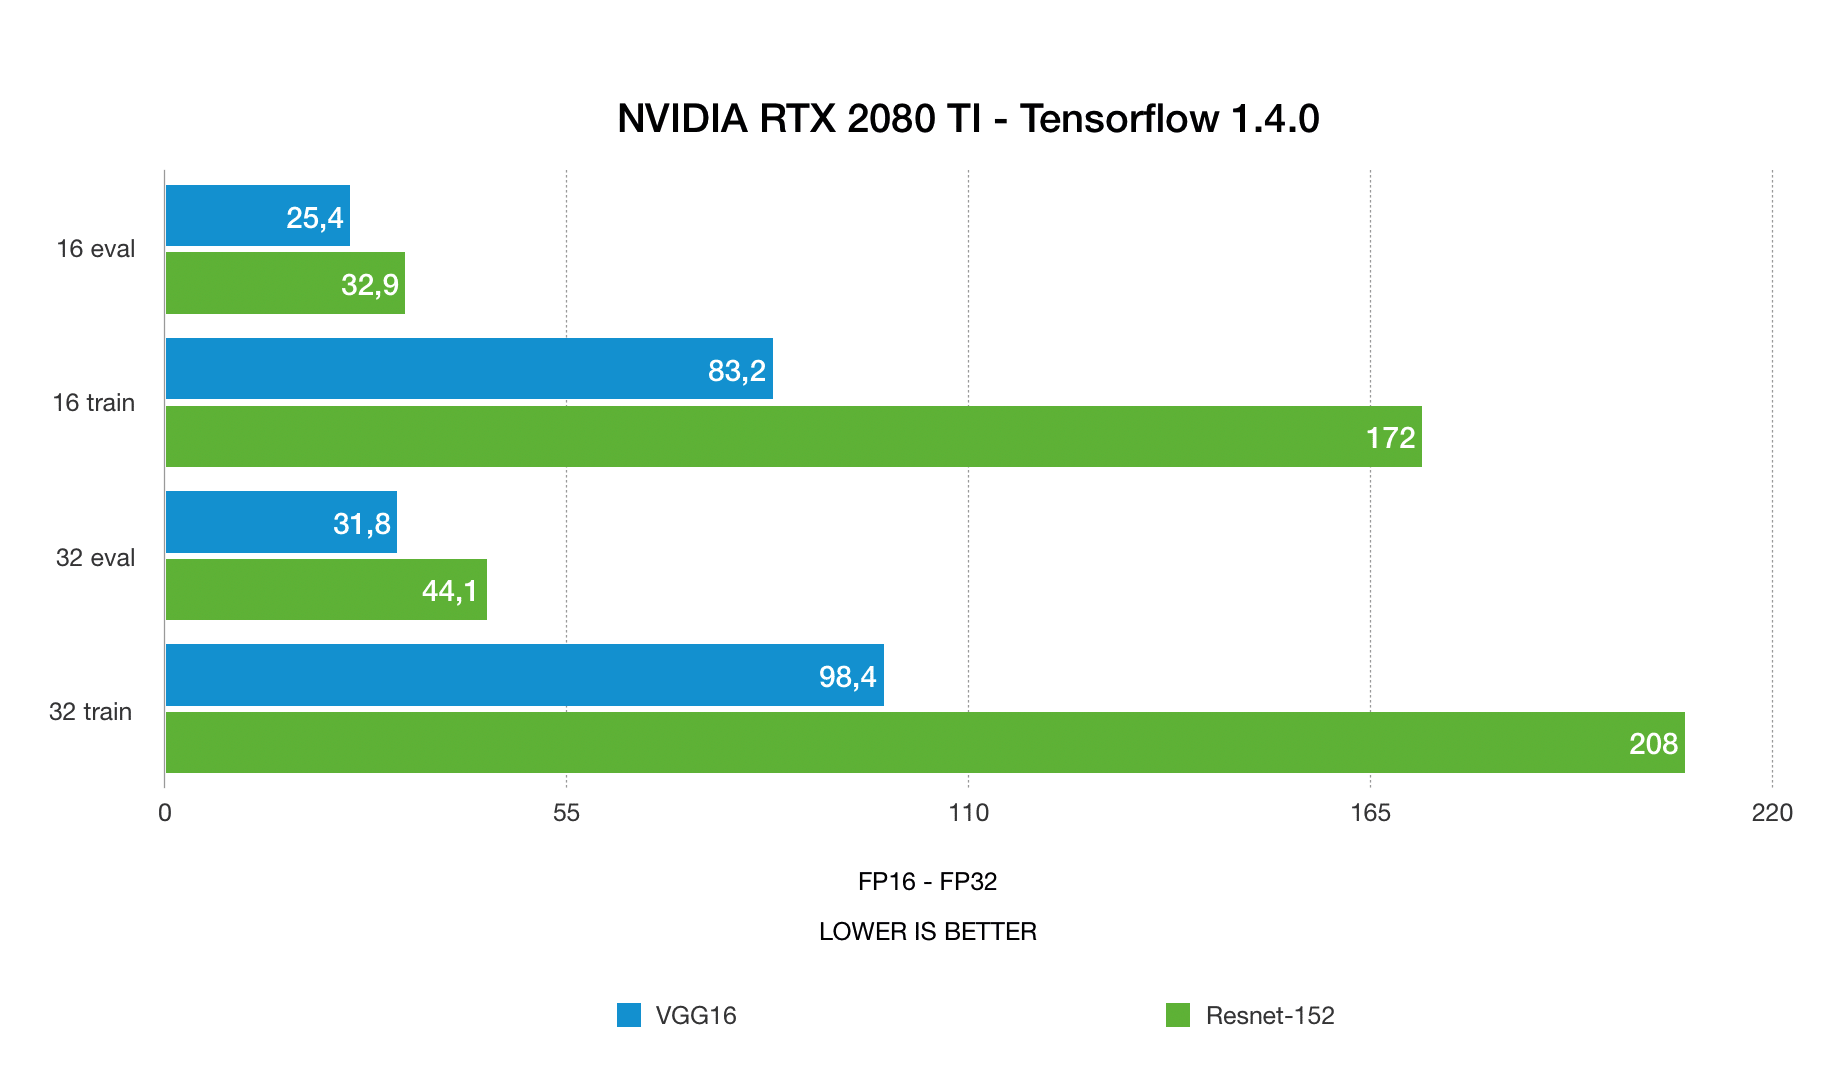 nvidia RTX 2080 Ti deep learning benchmarks